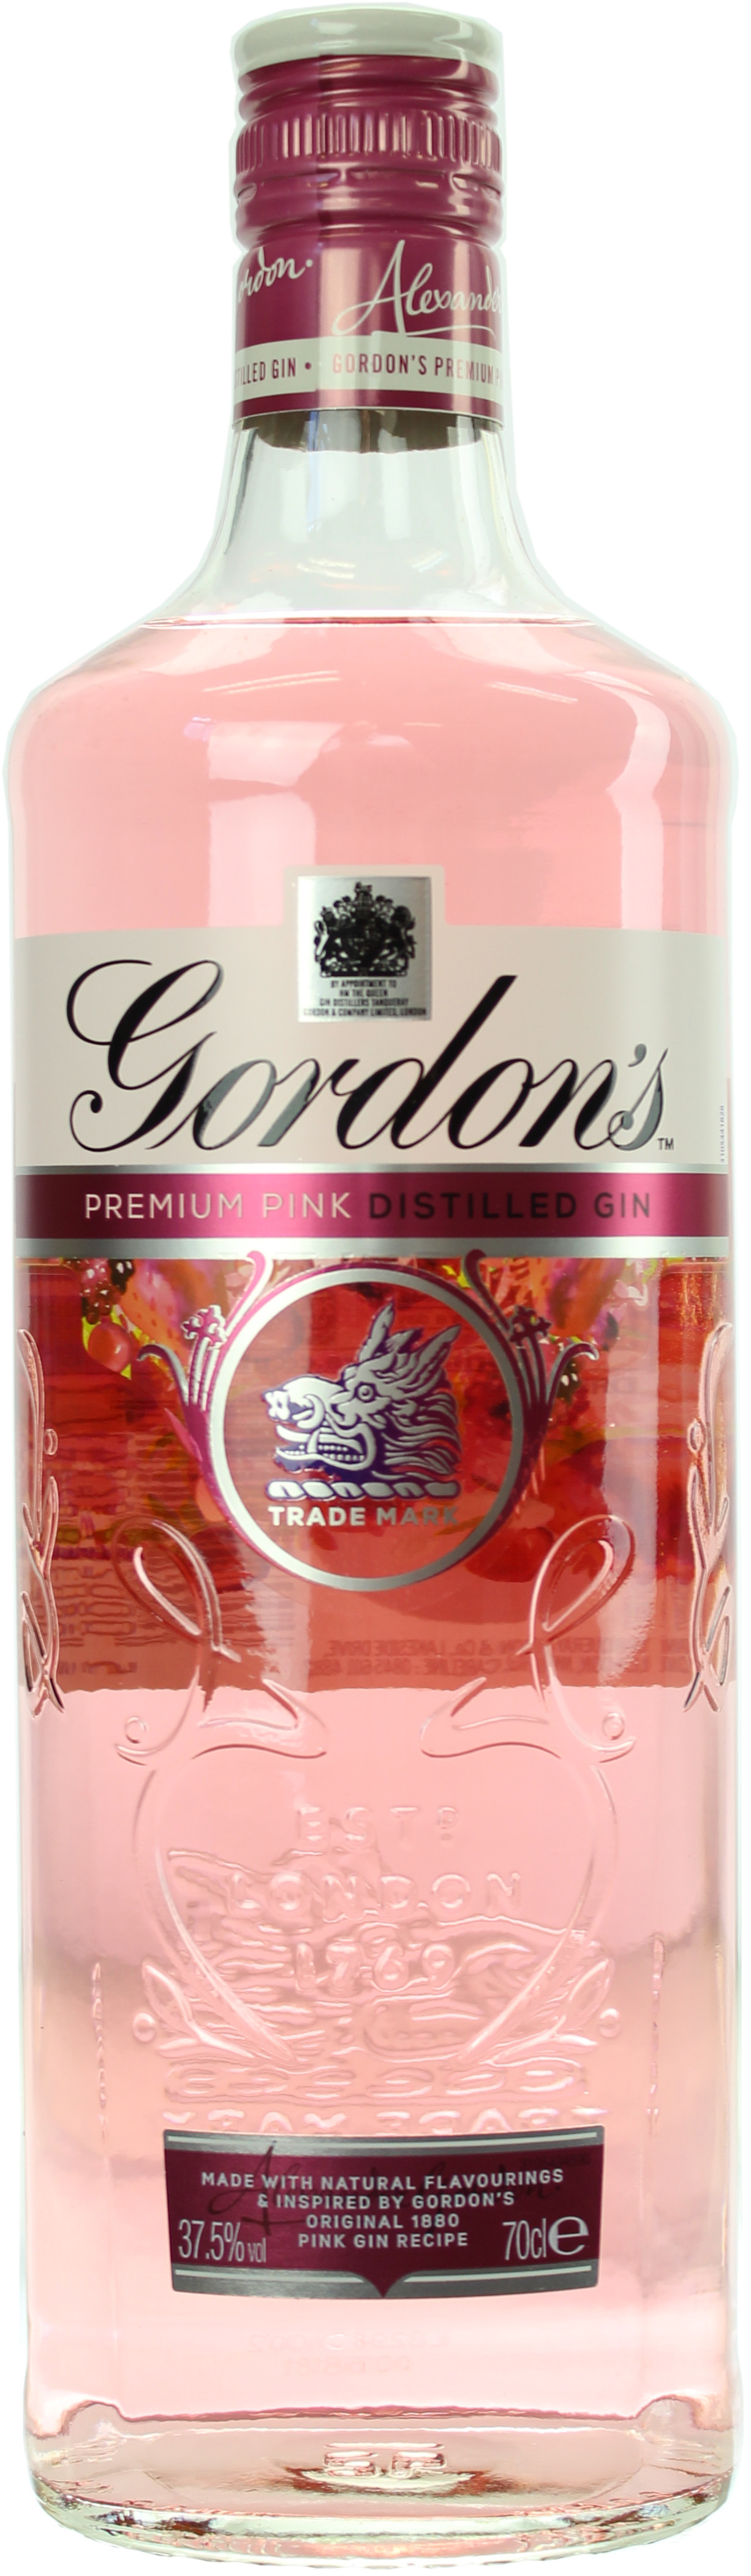 Gordon's Pink Premium Gin 37.5% 0,7l